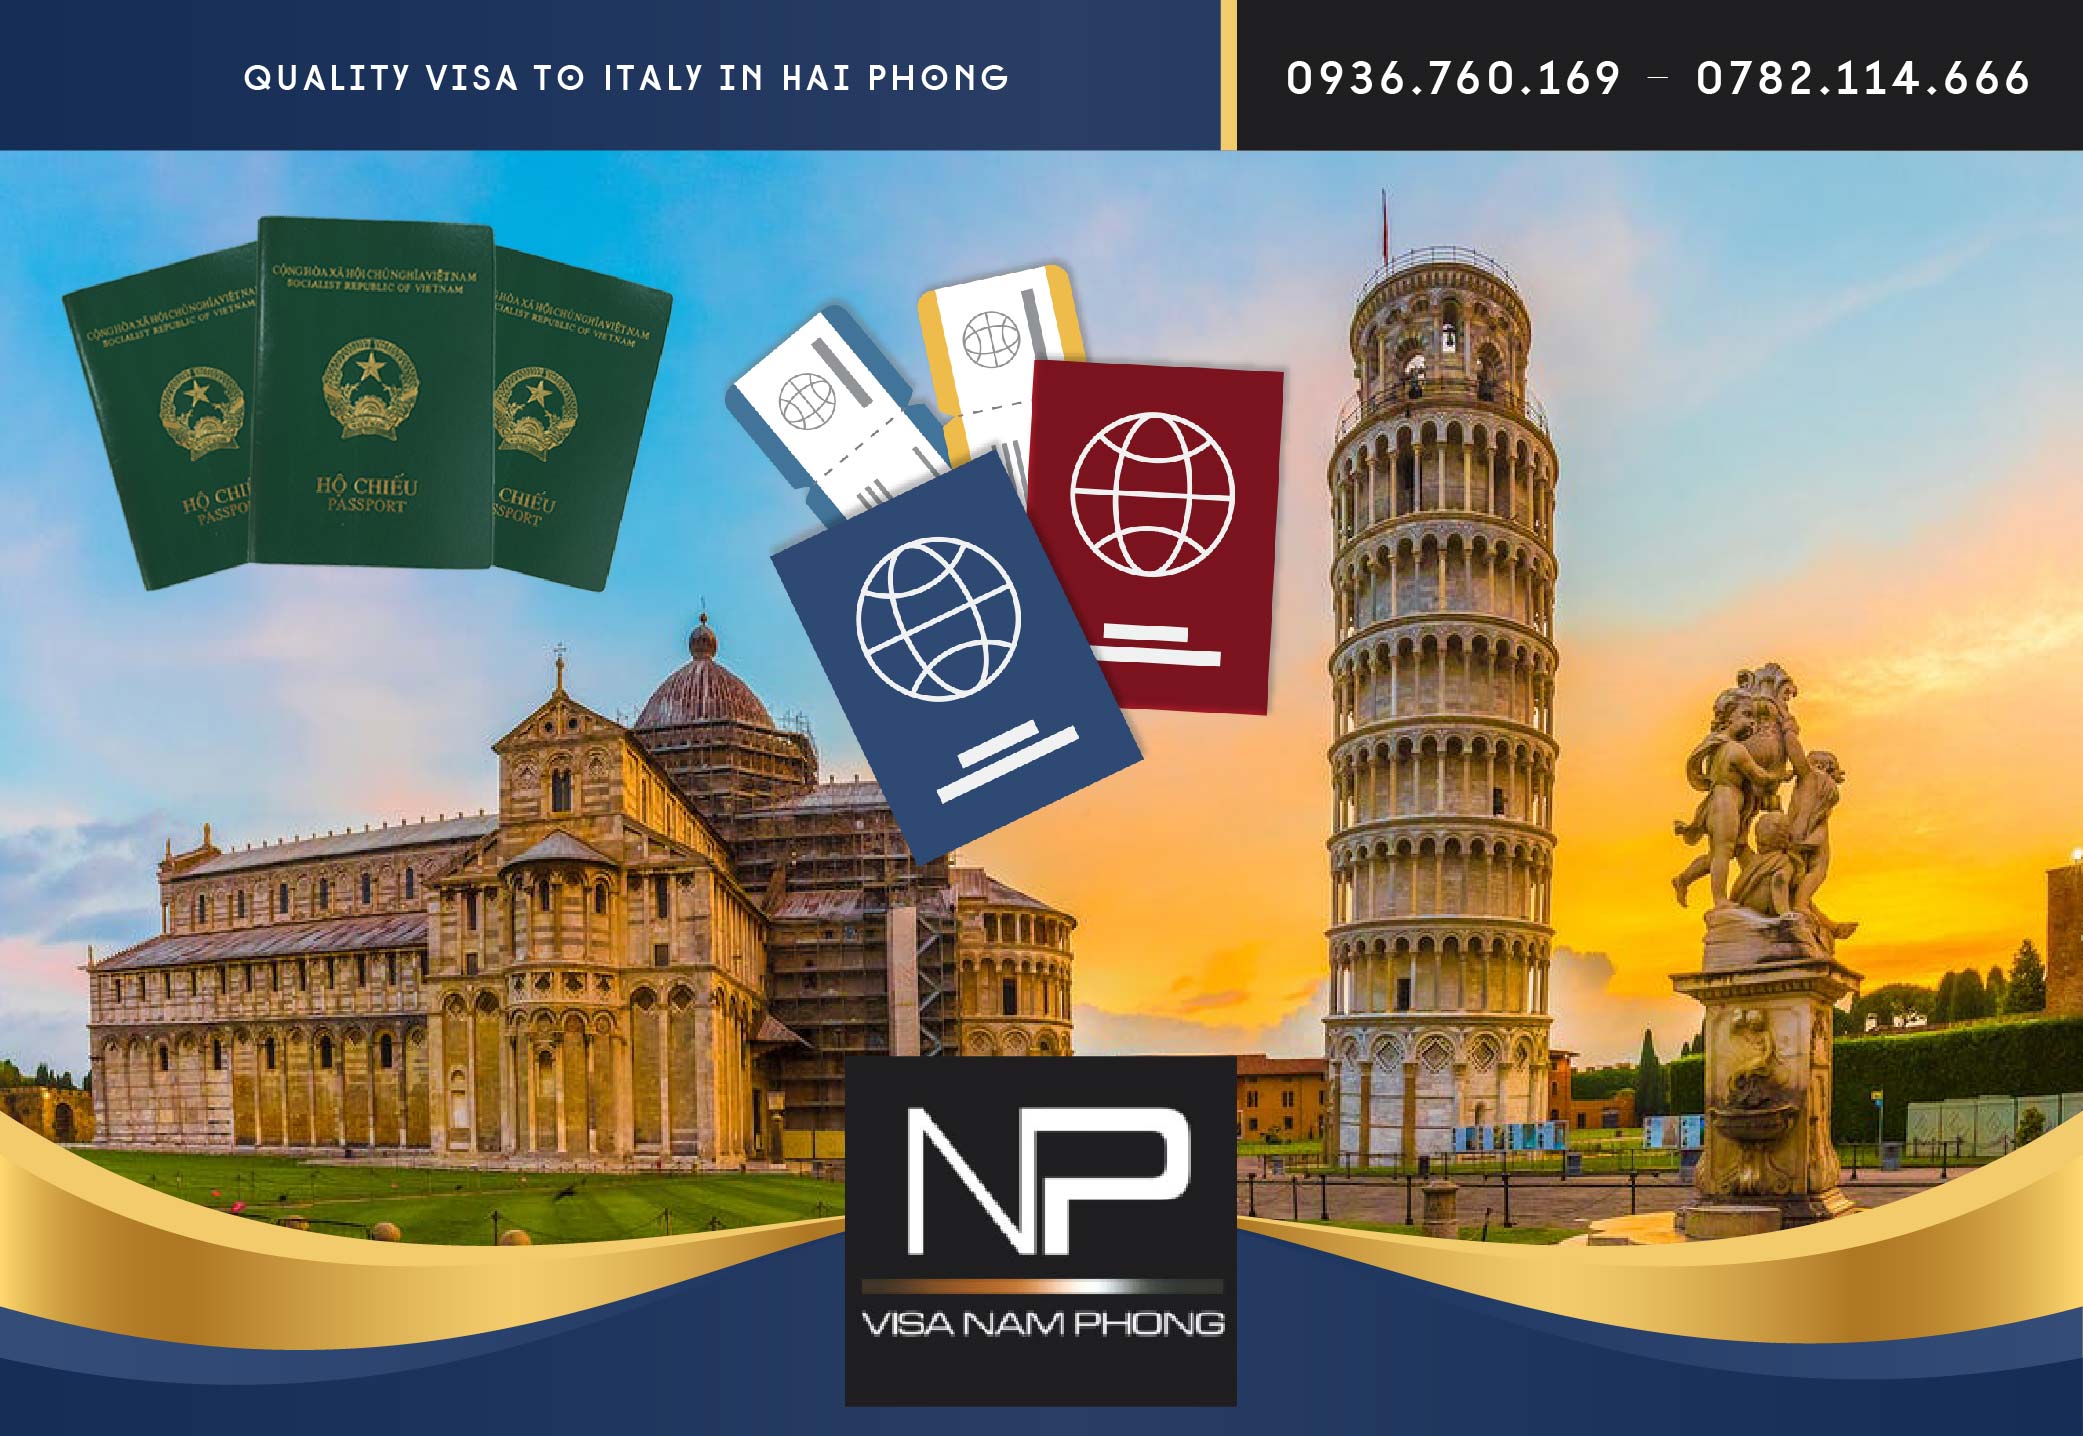 Quality visa to Italy in Hai Phong